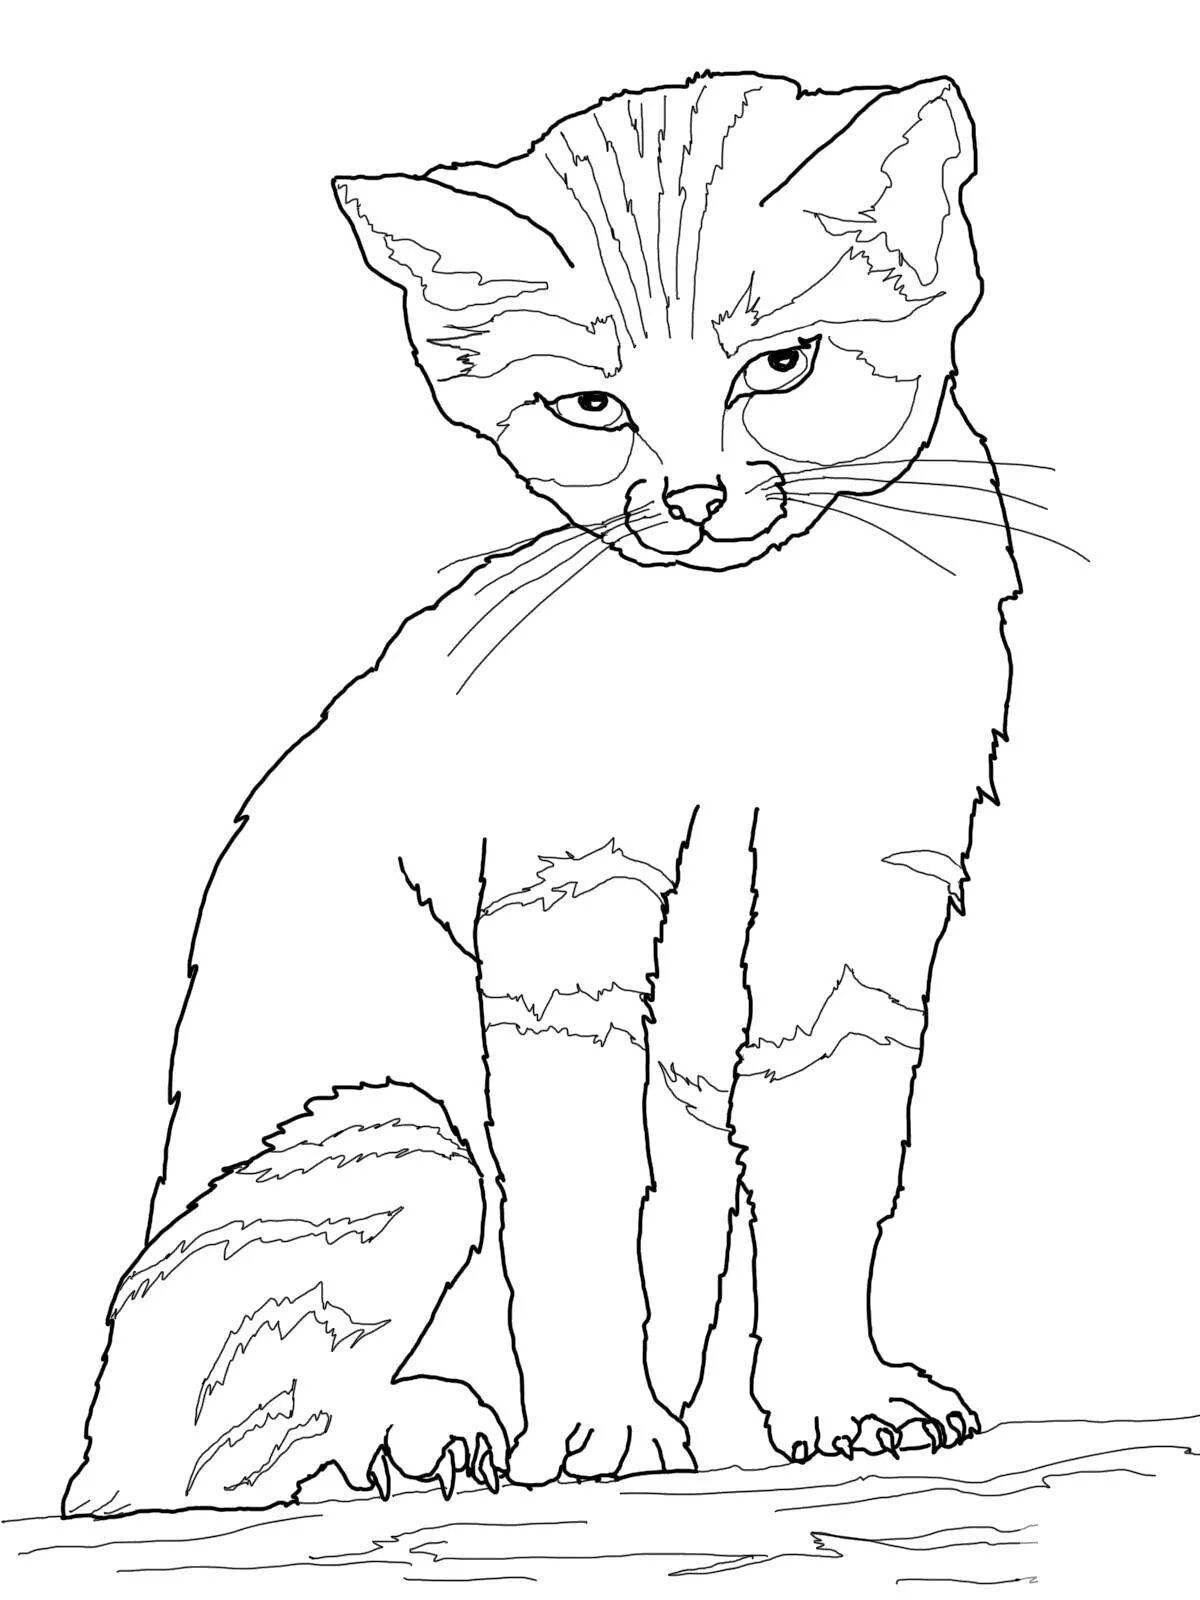 Alert cat coloring page